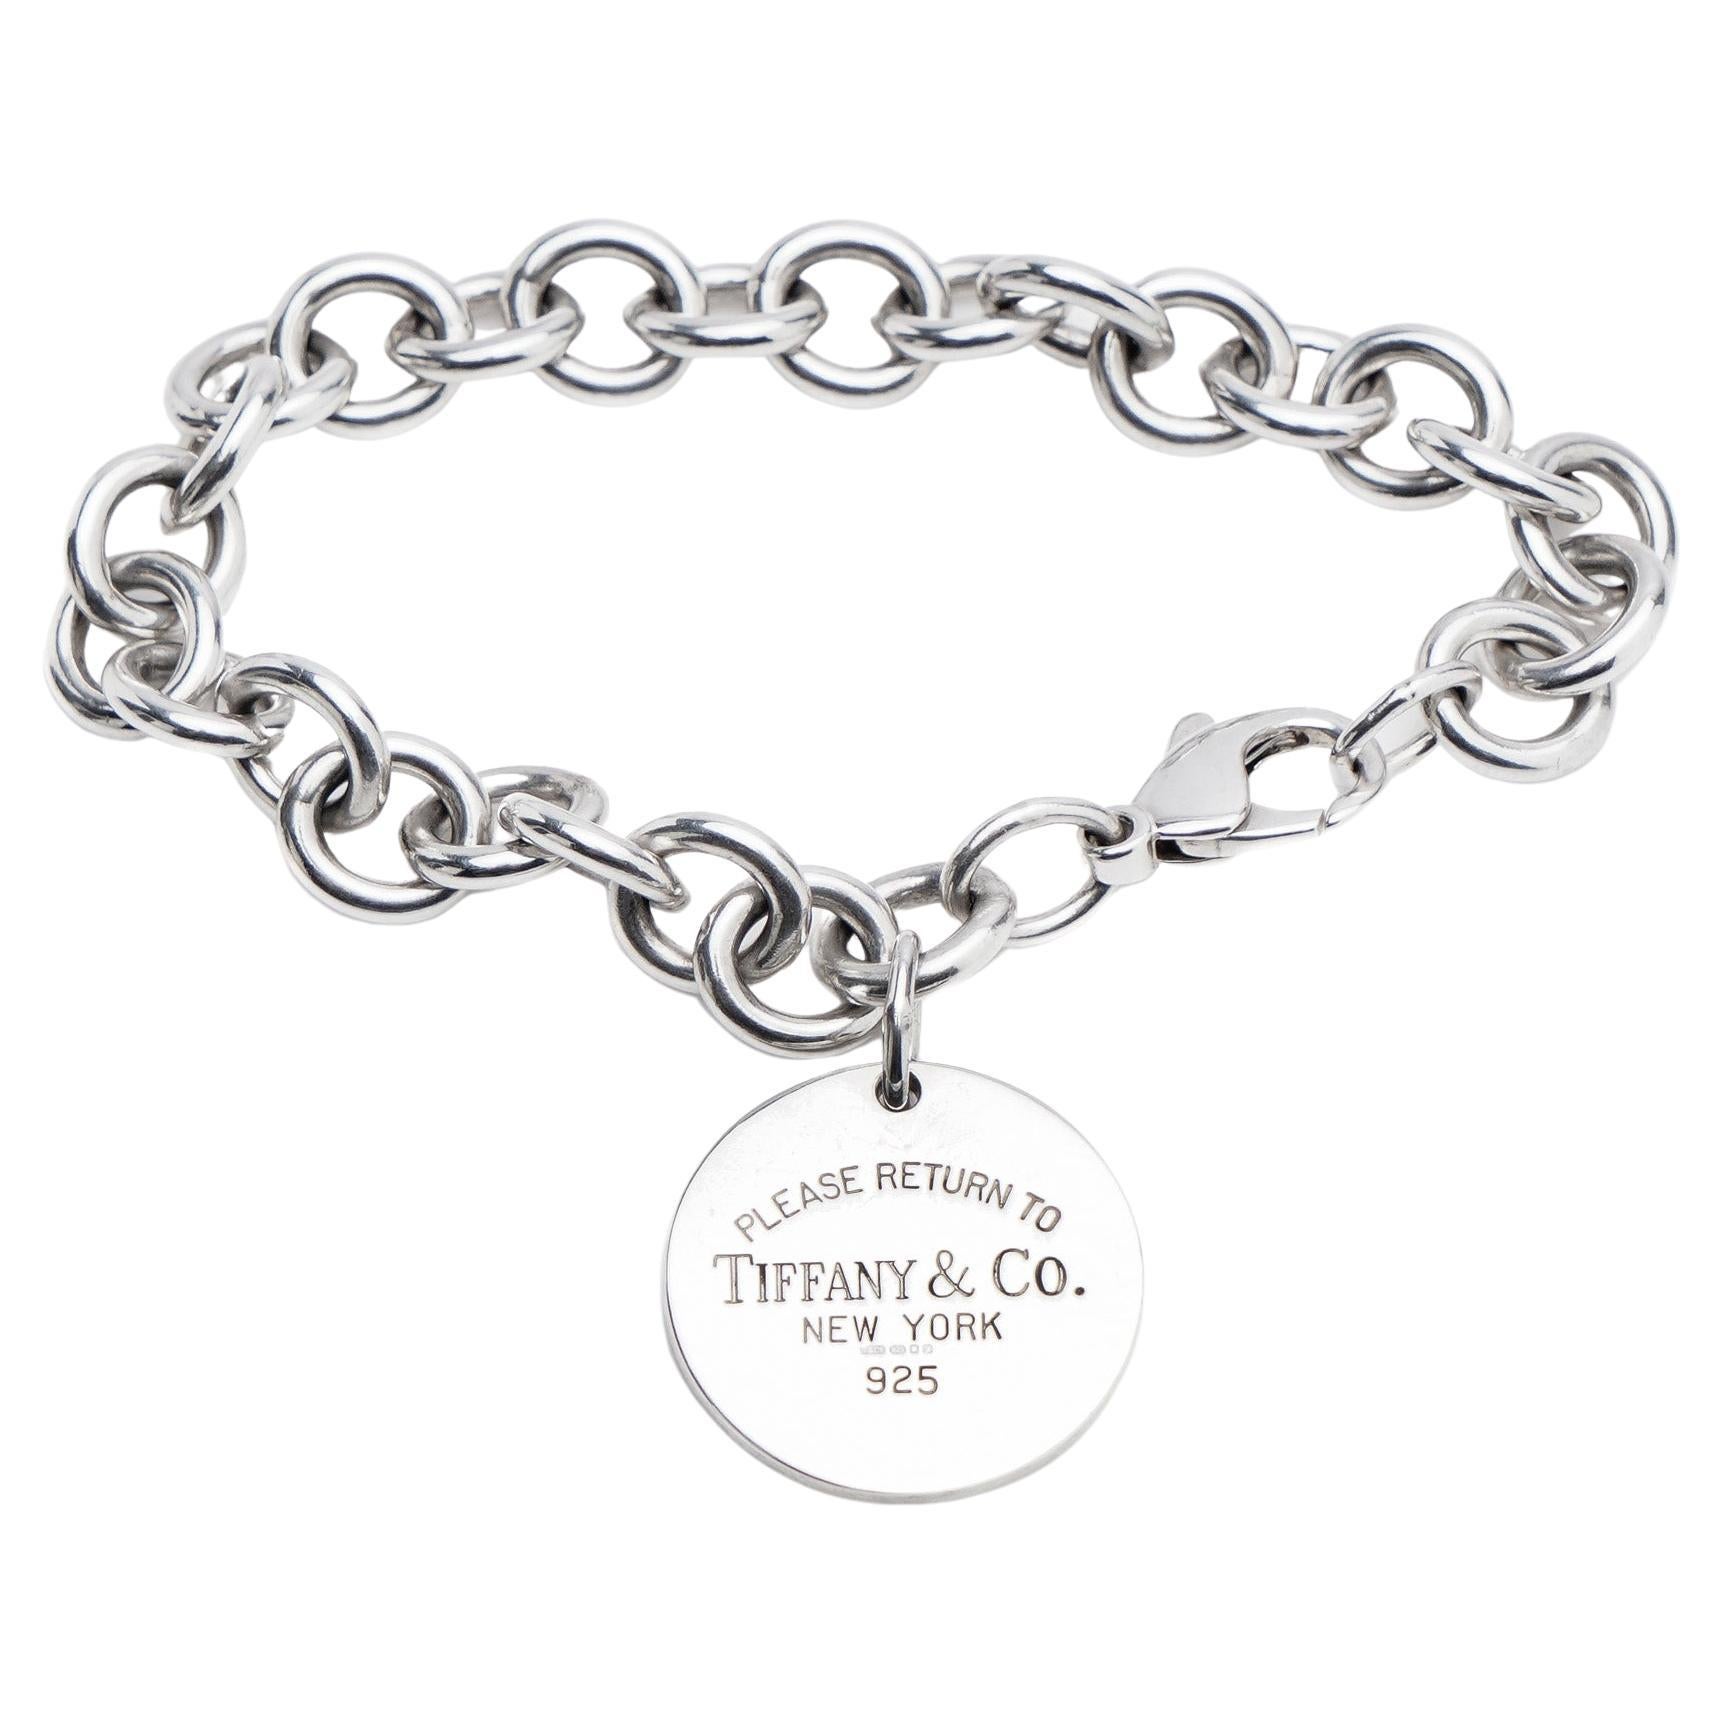 Tiffany & Co. Bracelets - 411 For Sale at 1stDibs